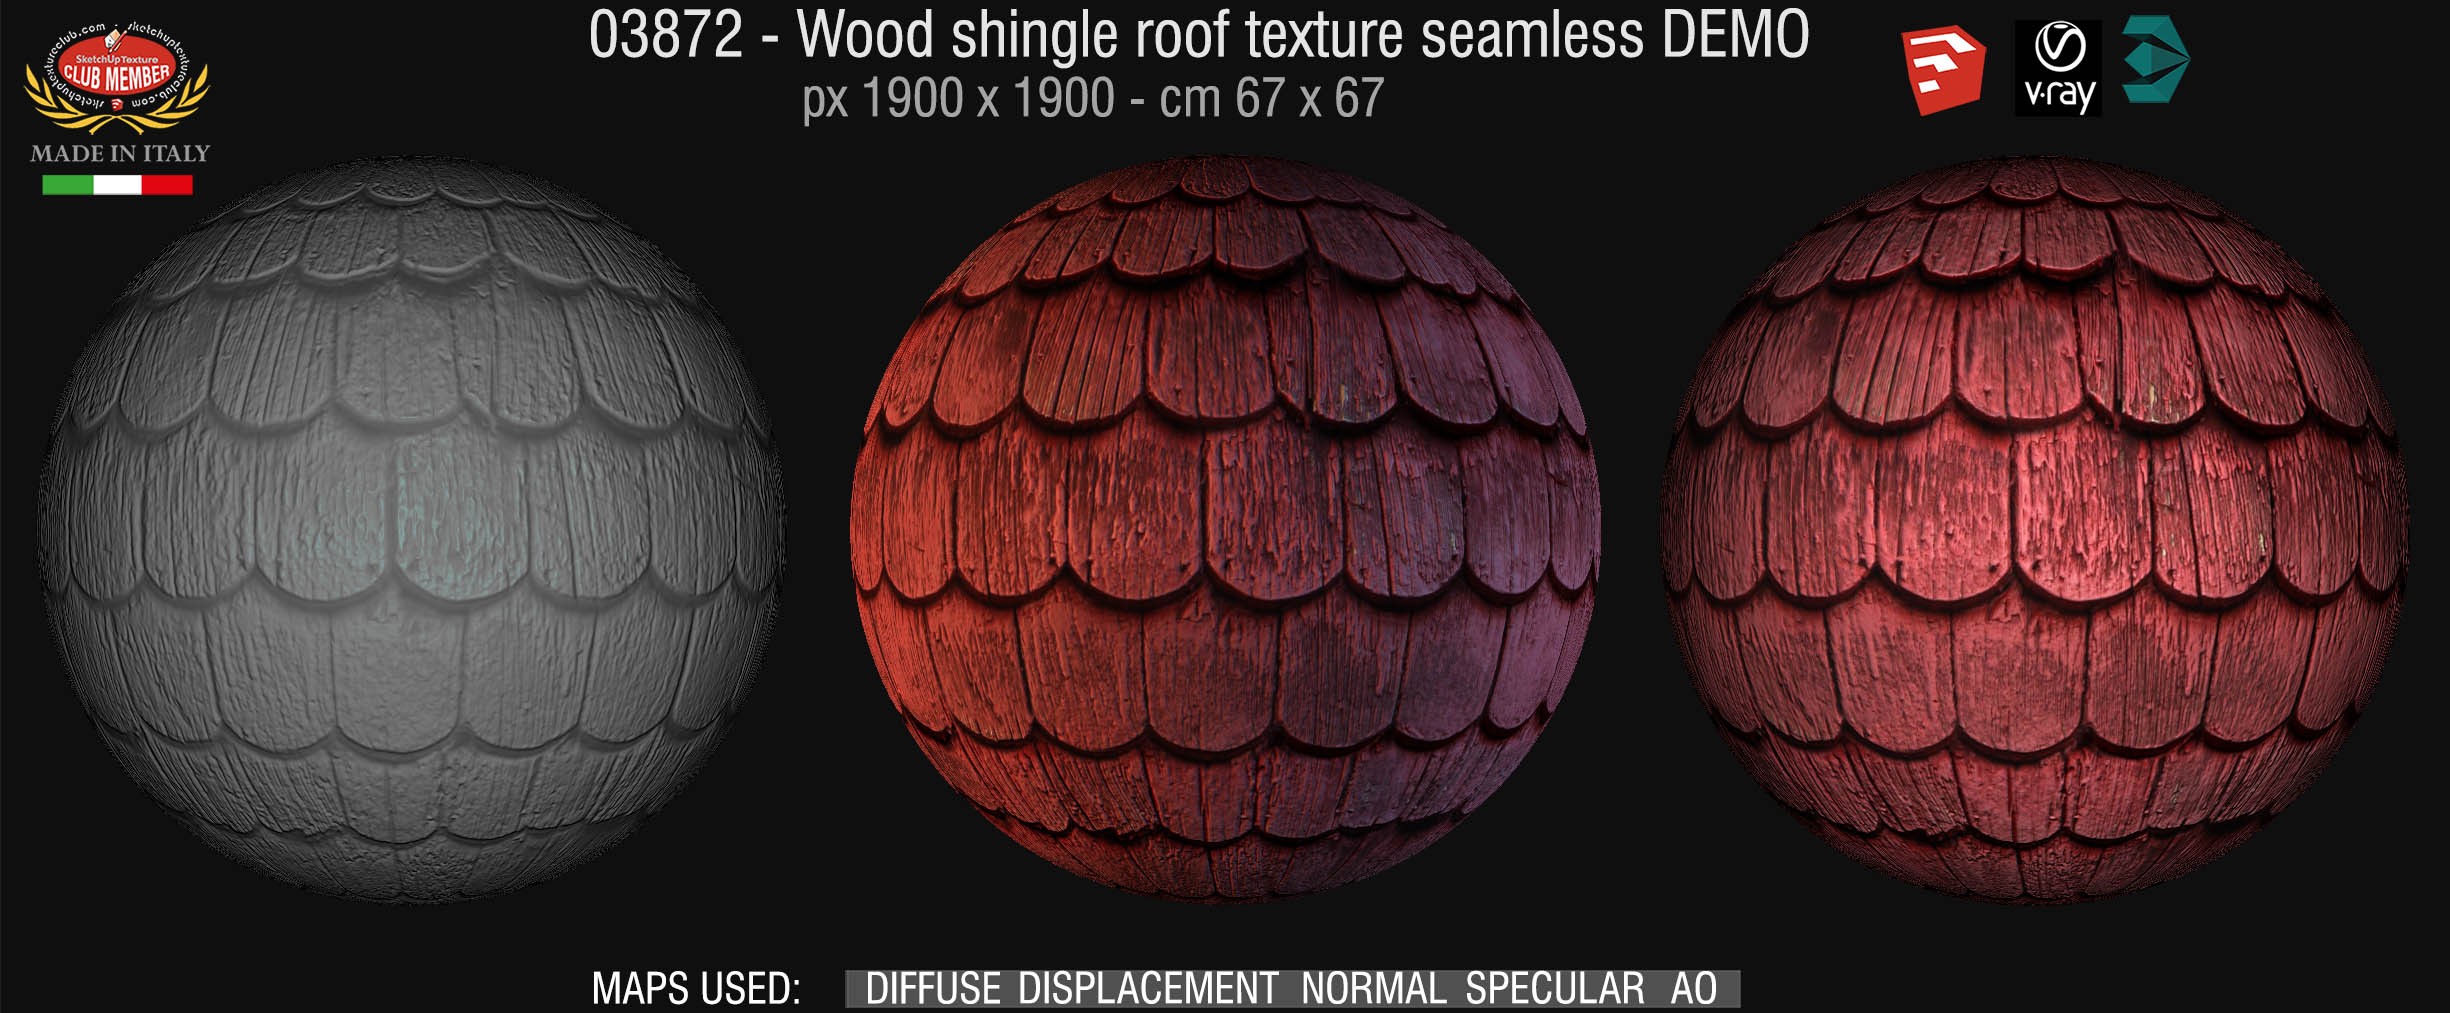 03872 Wood shingle roof texture seamless + maps DEMO